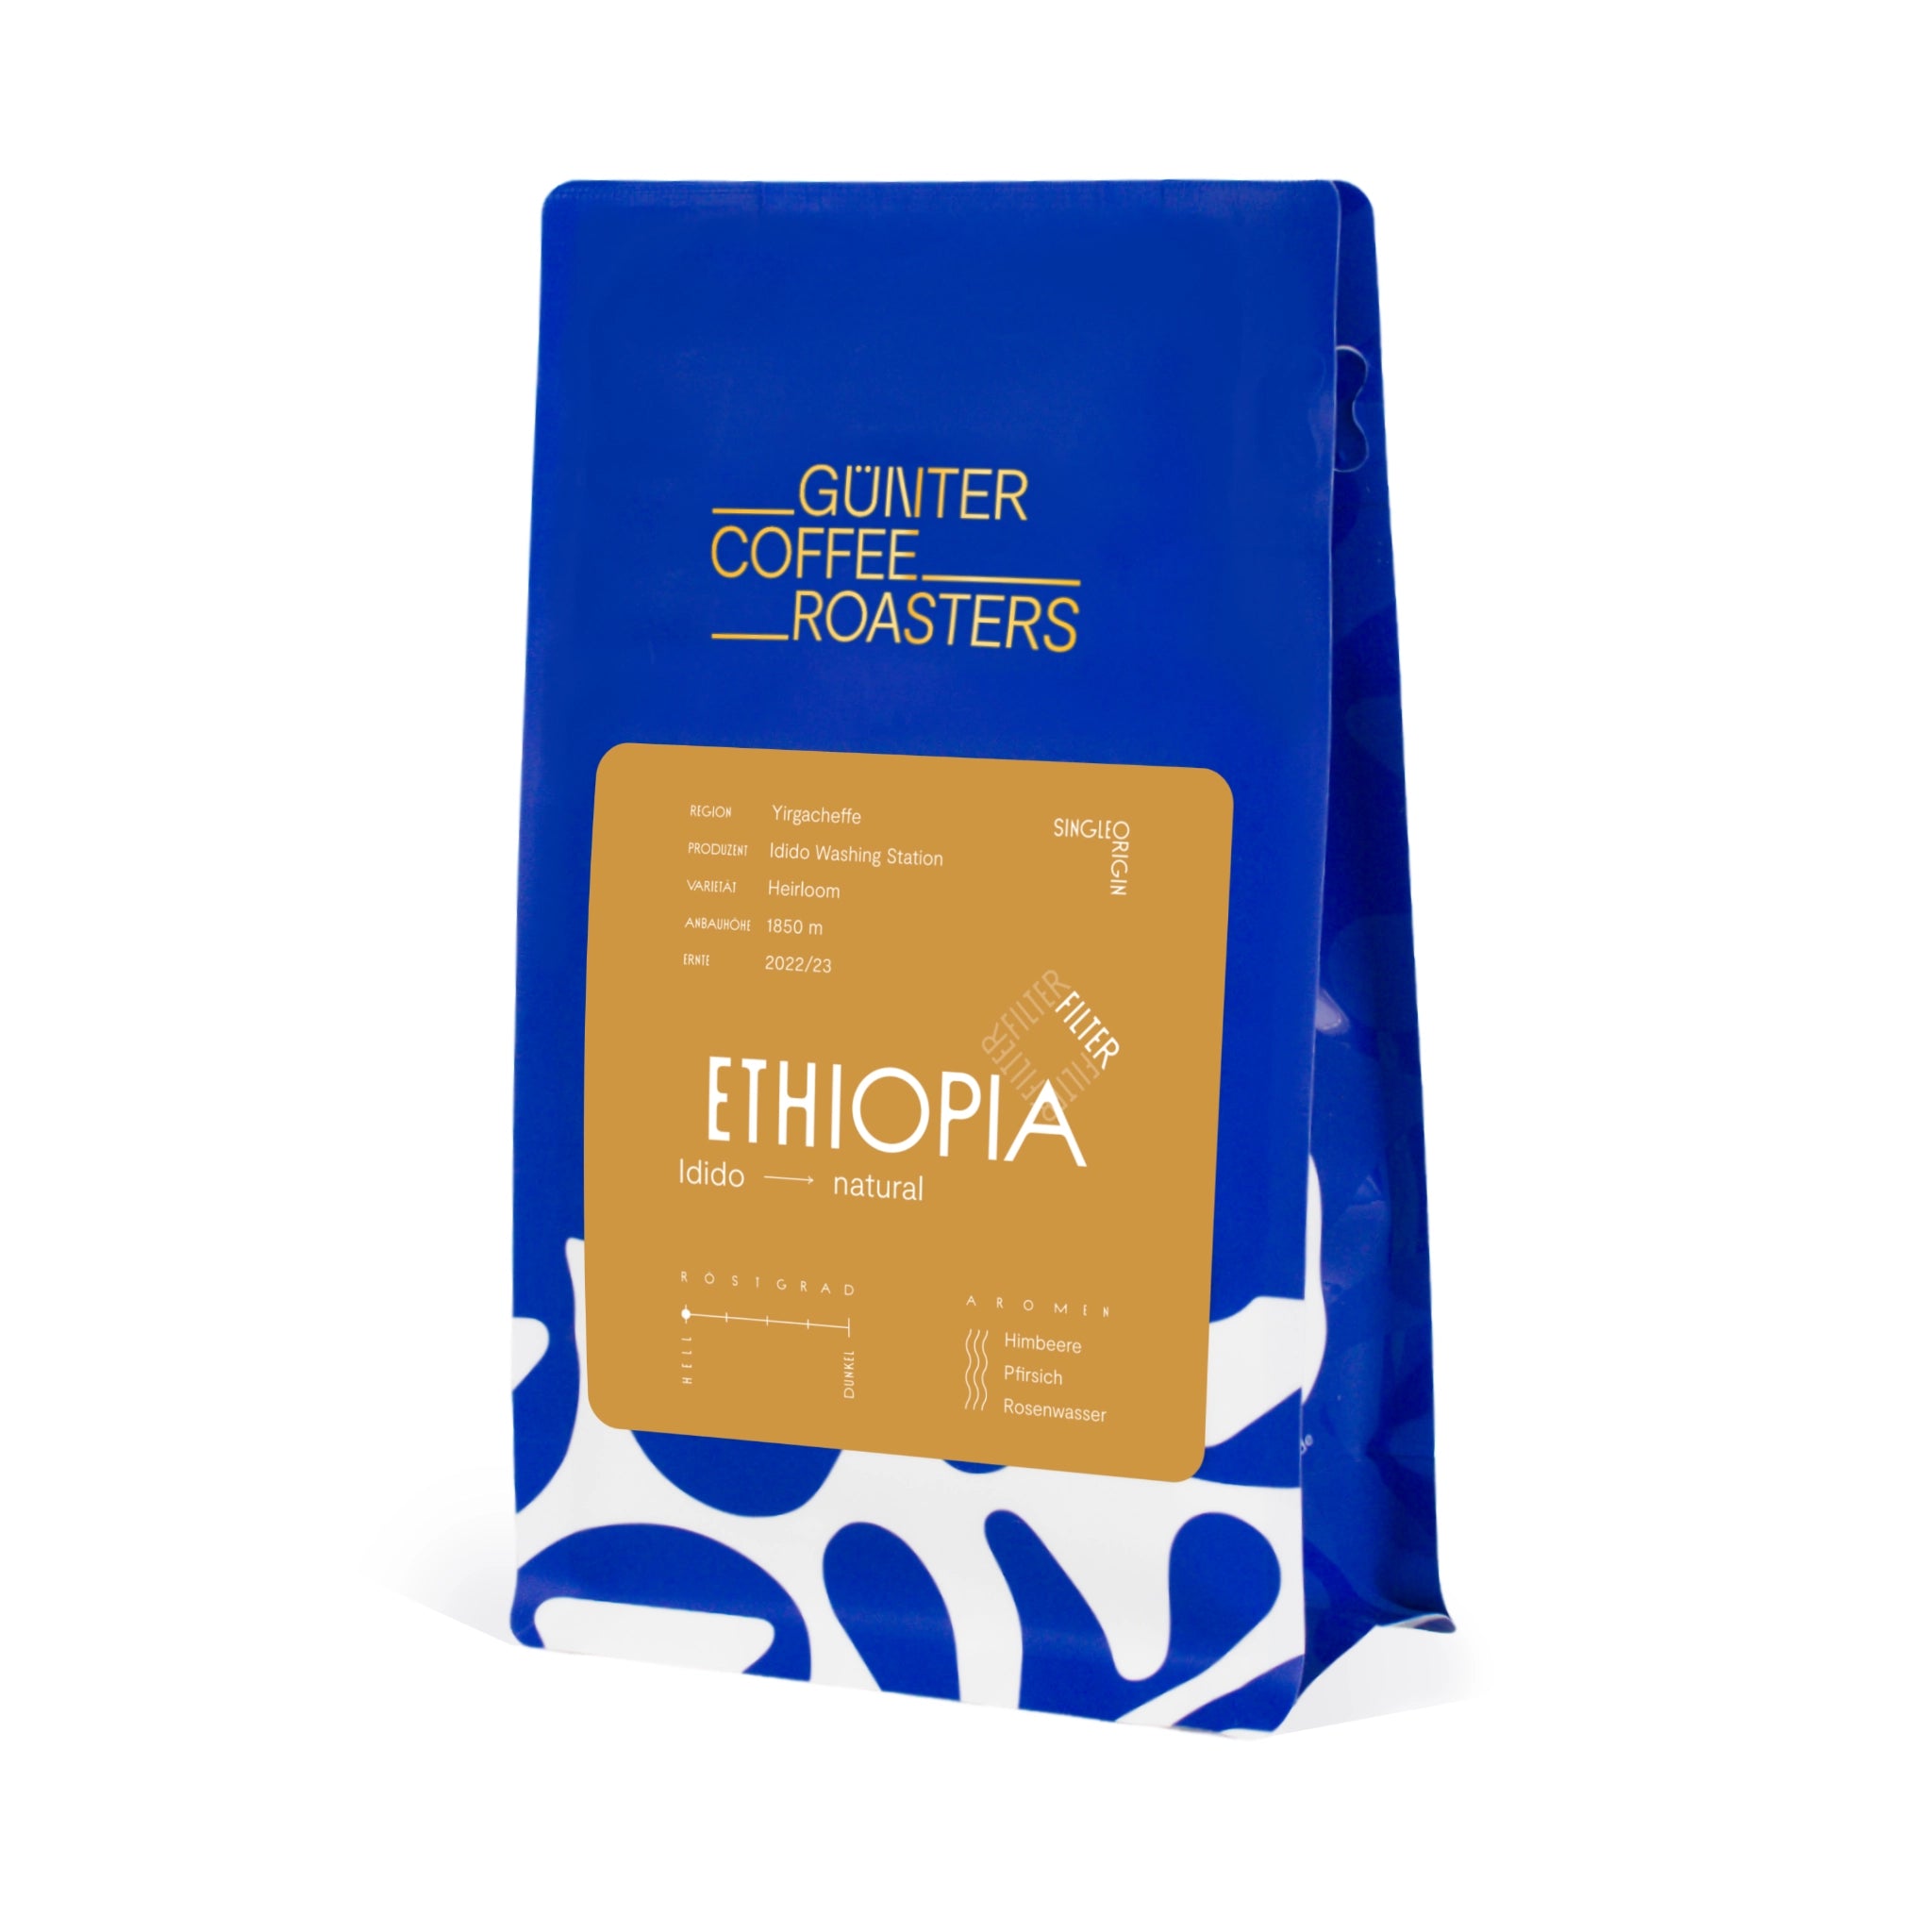 ETHIOPIA Idido Filter Coffee